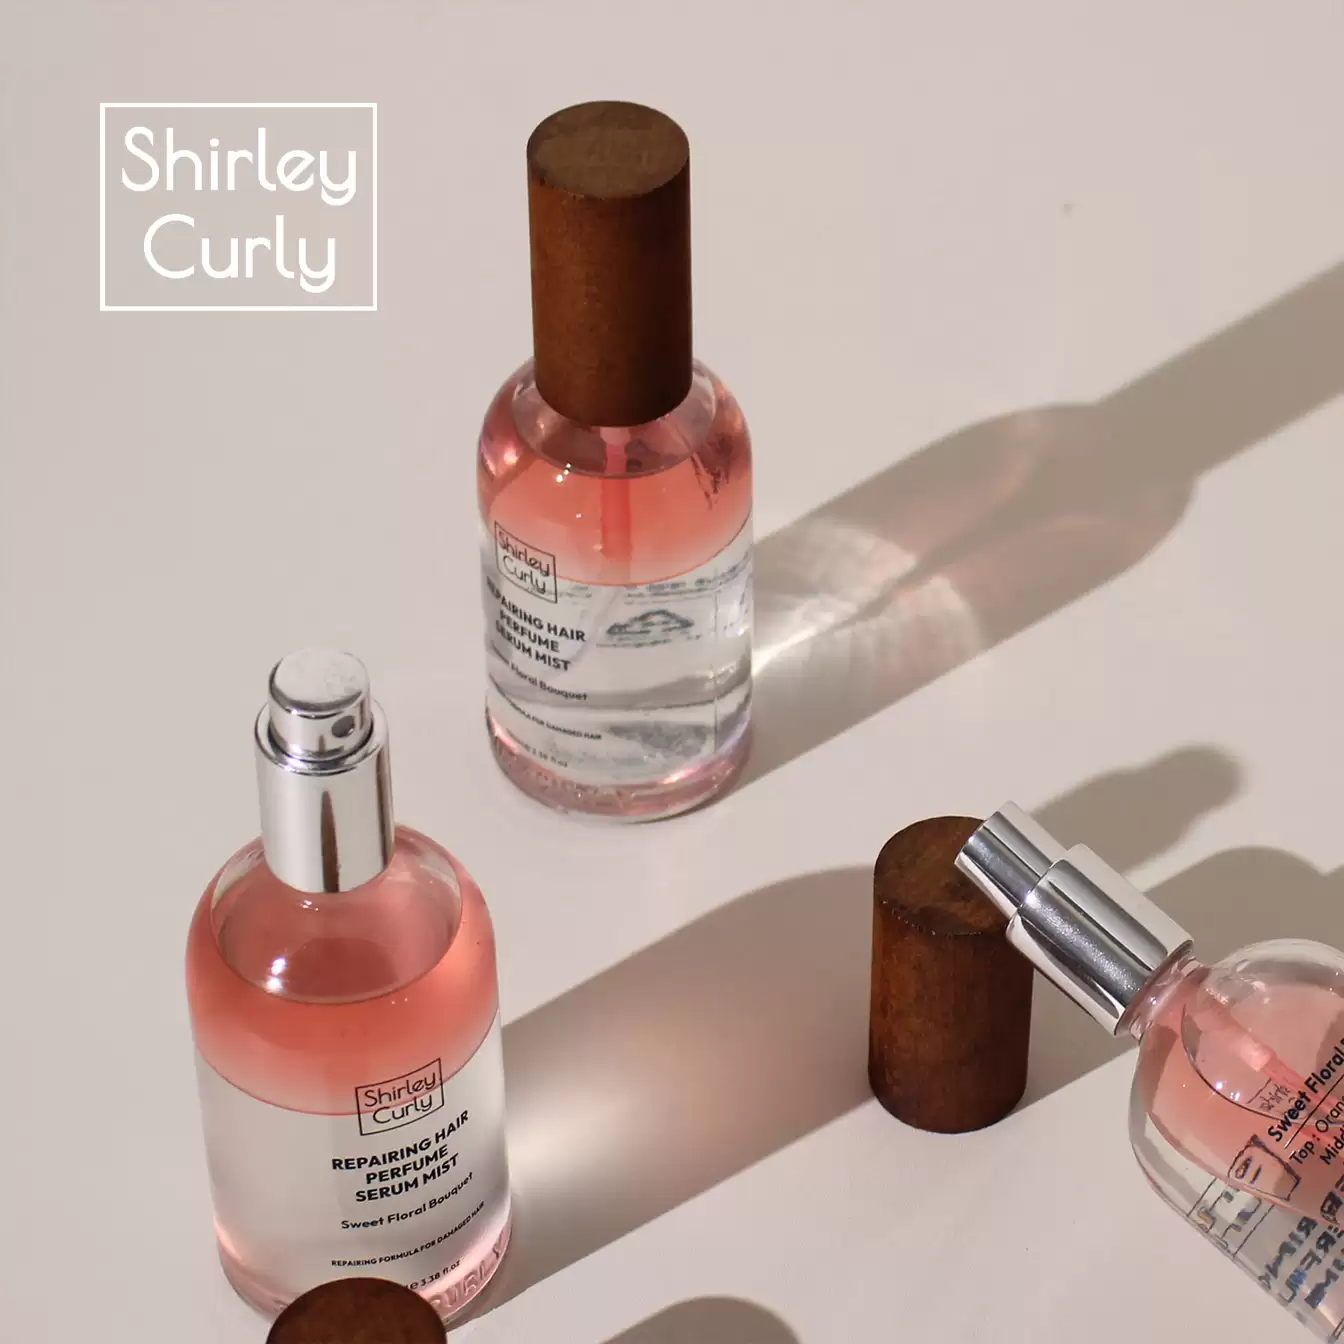 Xịt dưỡng tóc nước hoa - Shirley Curly repairing hair perfume serum mist 100ml - Droppii Mall